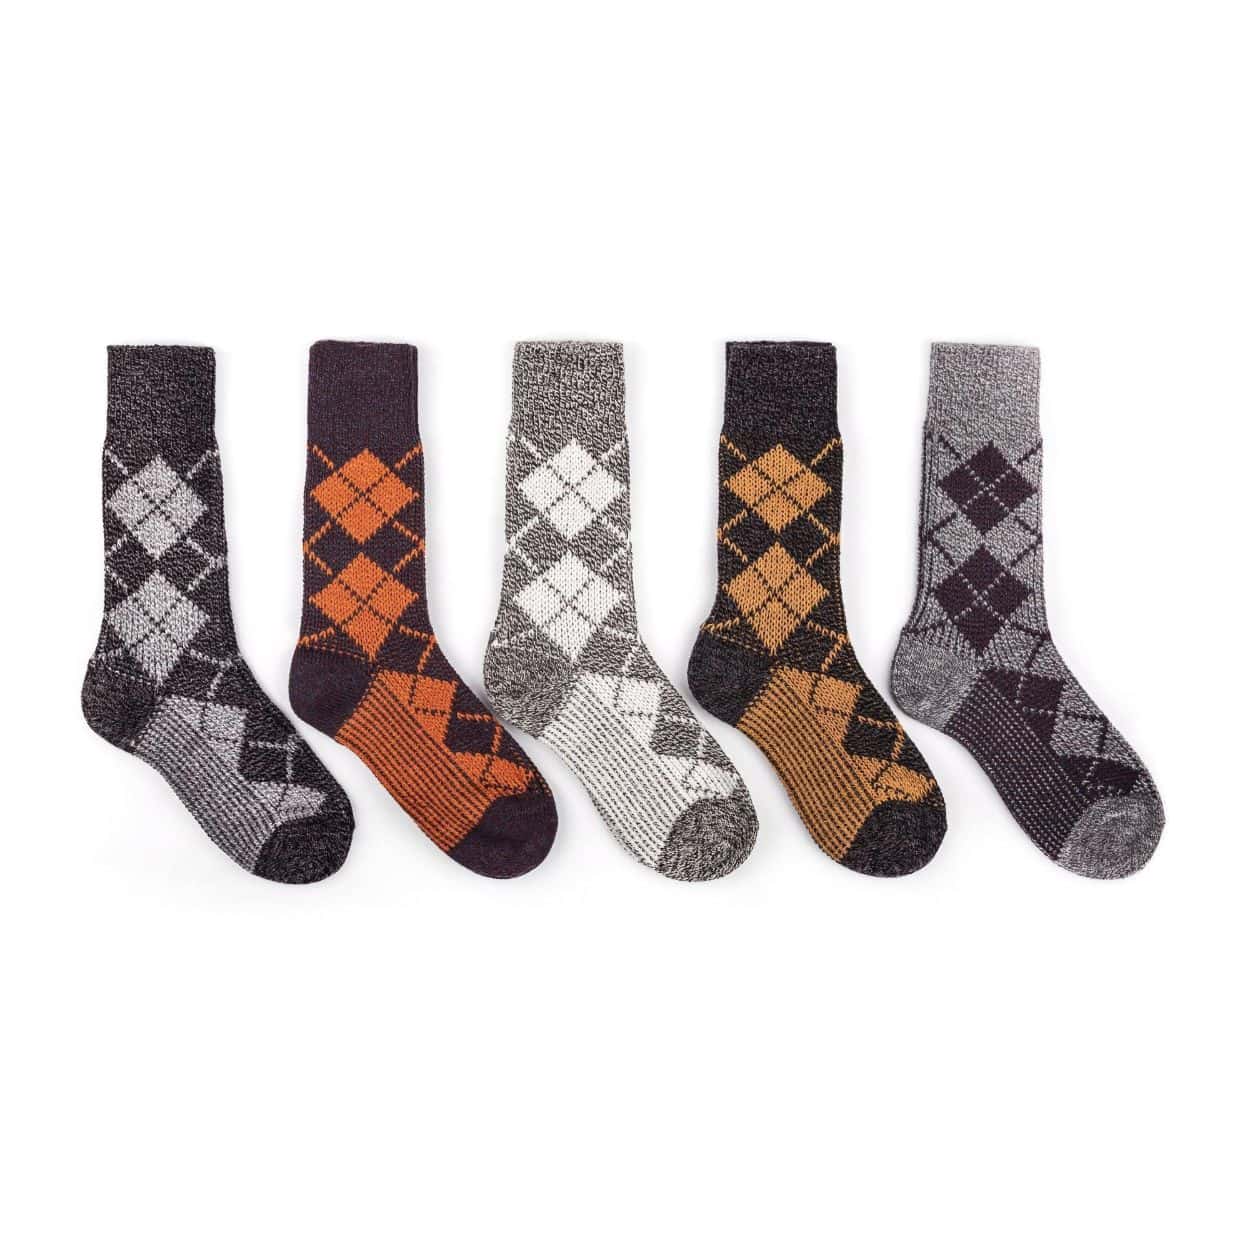 Ragnar (5 pairs) - Nordic Socks US